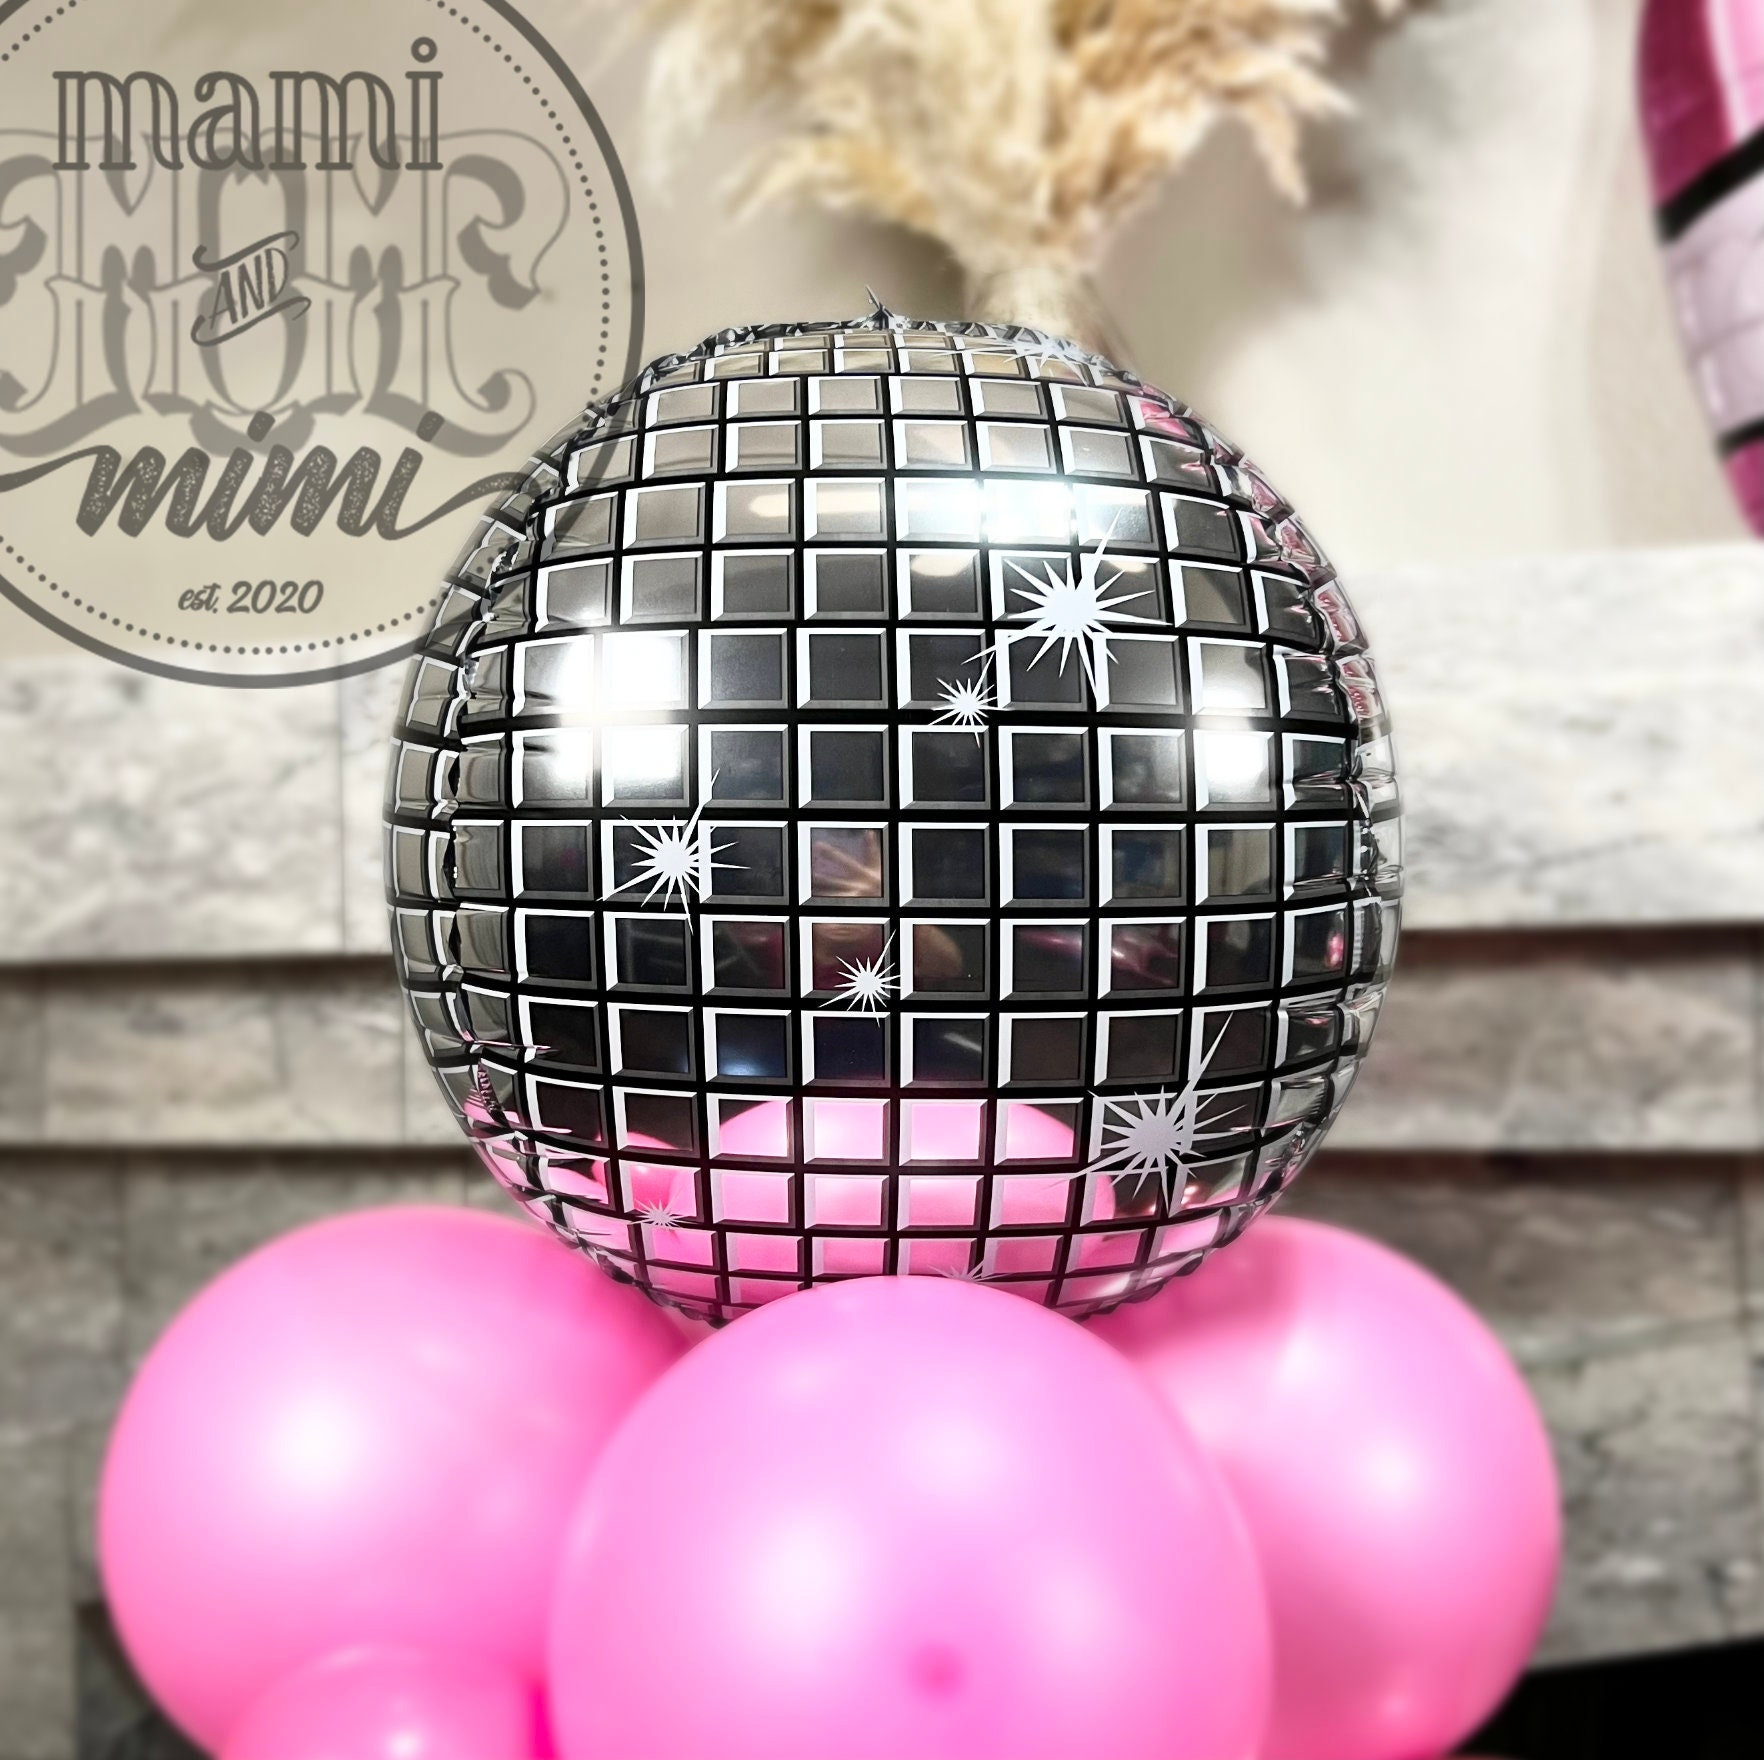 Disco Balloon Garland, Disco Party Decorations, Last Disco, Disco Party  Decor, Disco Ball Balloons, Last Rodeo, Disco Bachelorette Party 